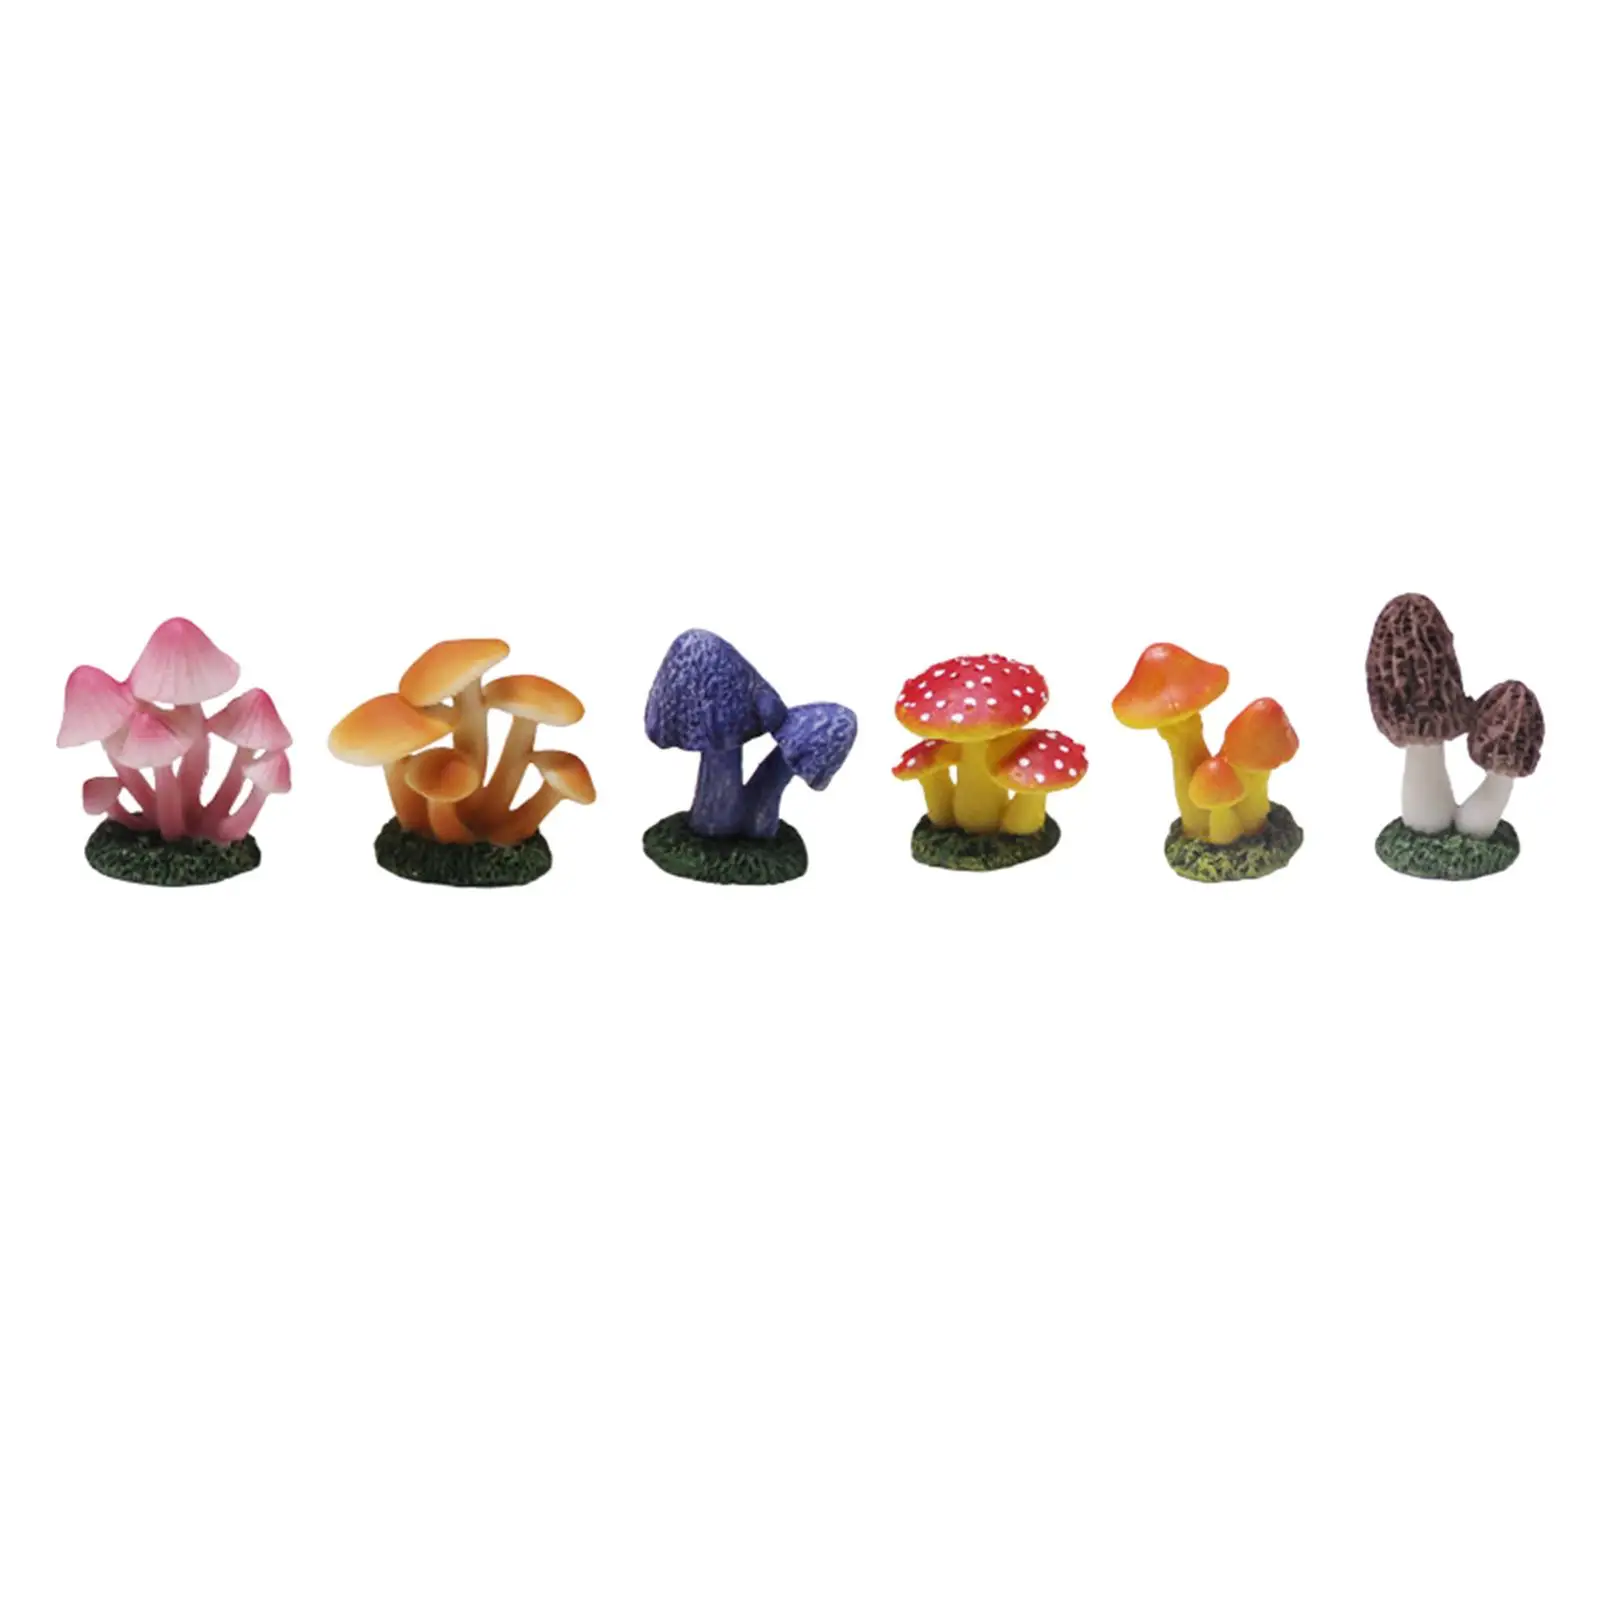 6x Mini Mushroom Figurines Mushroom Model Flowerpot Decor Fairy Garden Decoration for Lawn DIY Bonsai Craft Plant Pot Aquarium